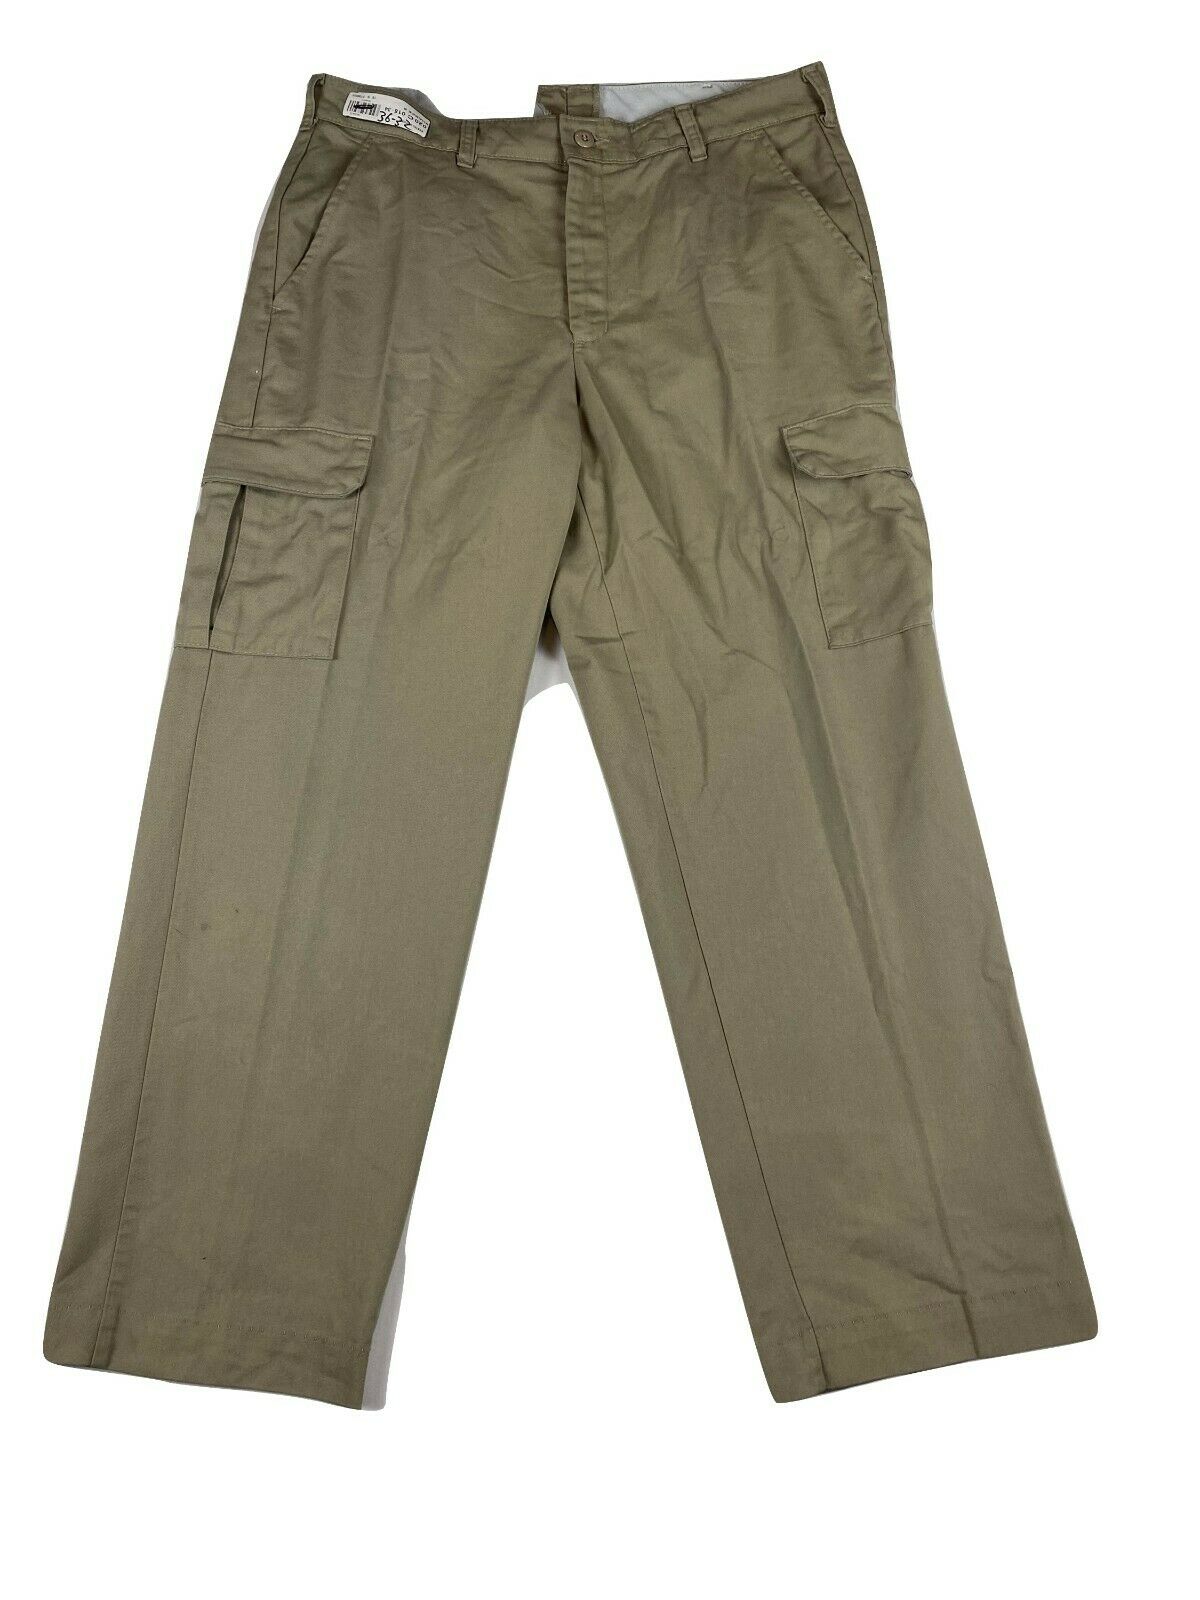 Khaki Cargo Work Pants - Beige / Tan / Brown - Red Kap, Cintas, Etc Used Uniform